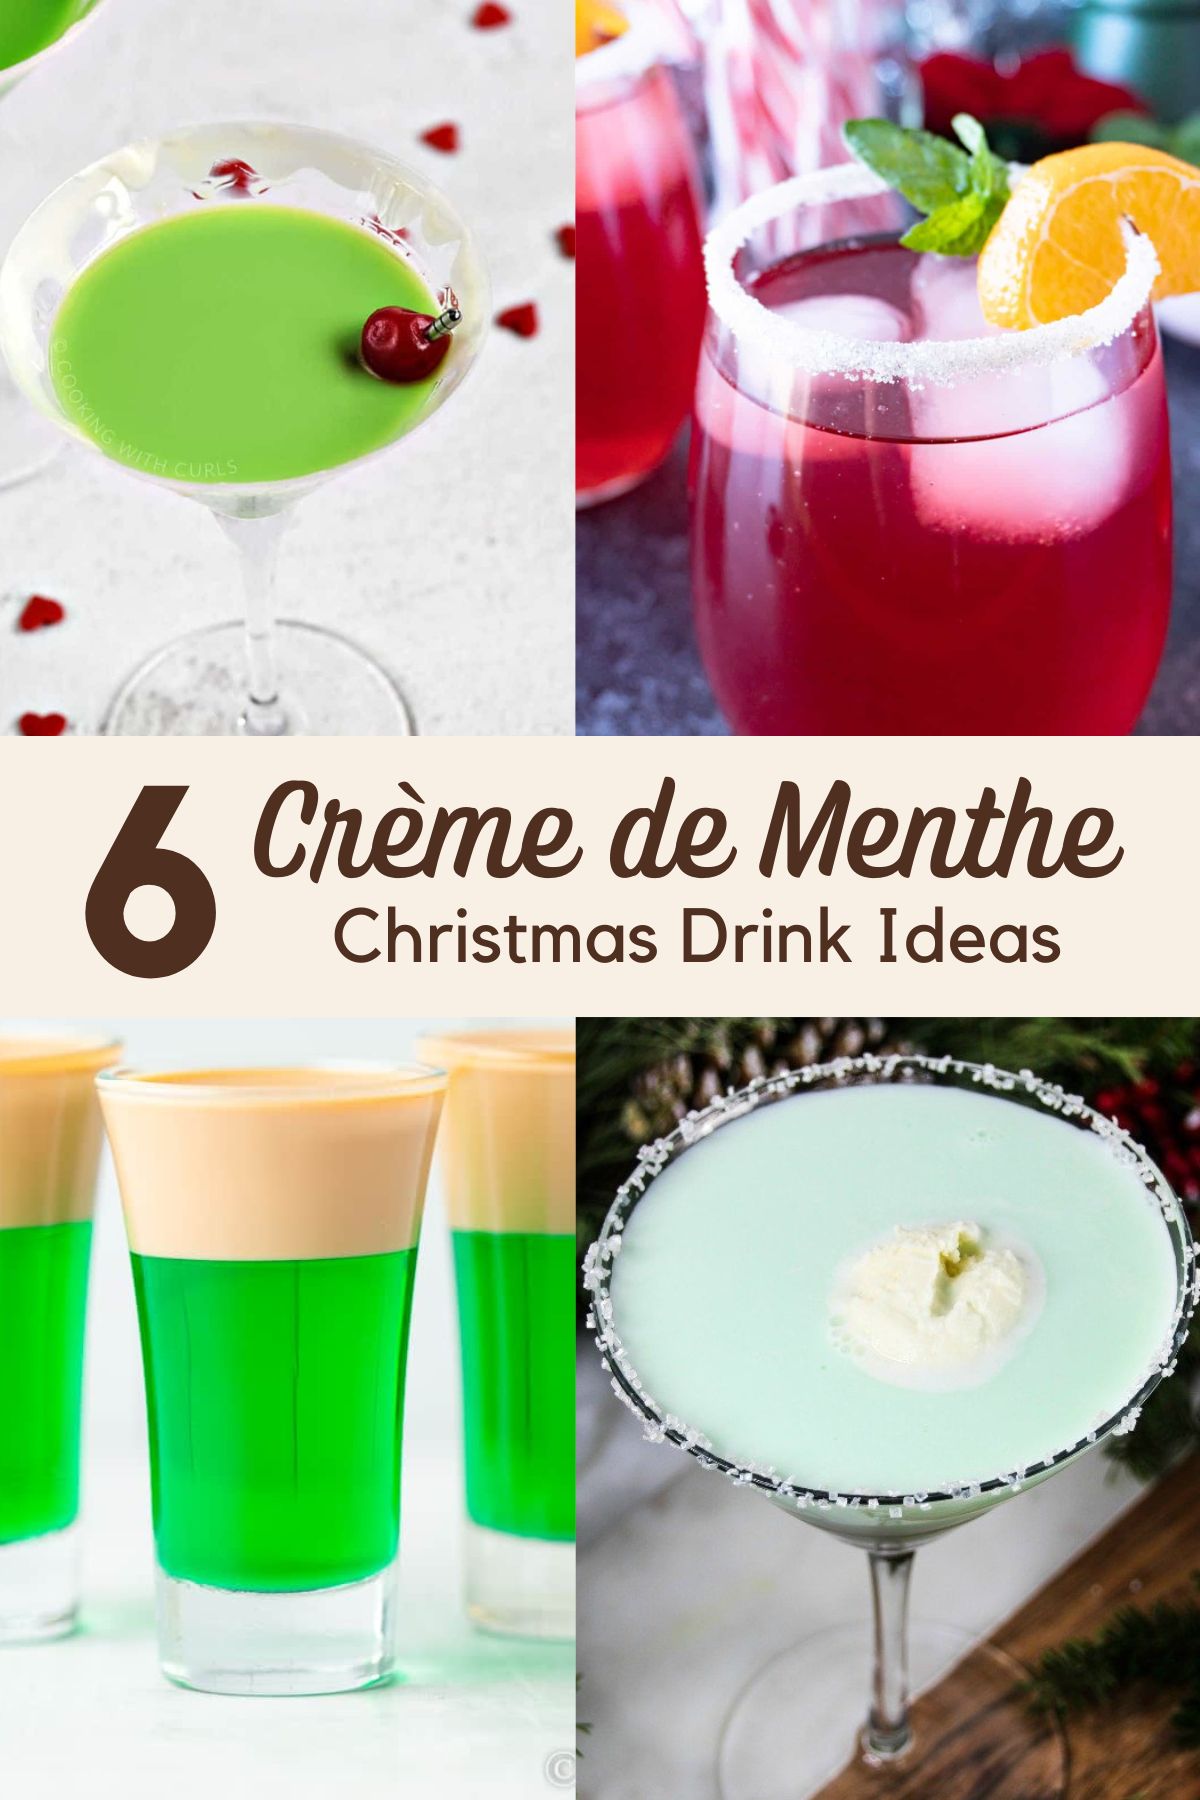 4 photos of creme de menthe christmas drinks.